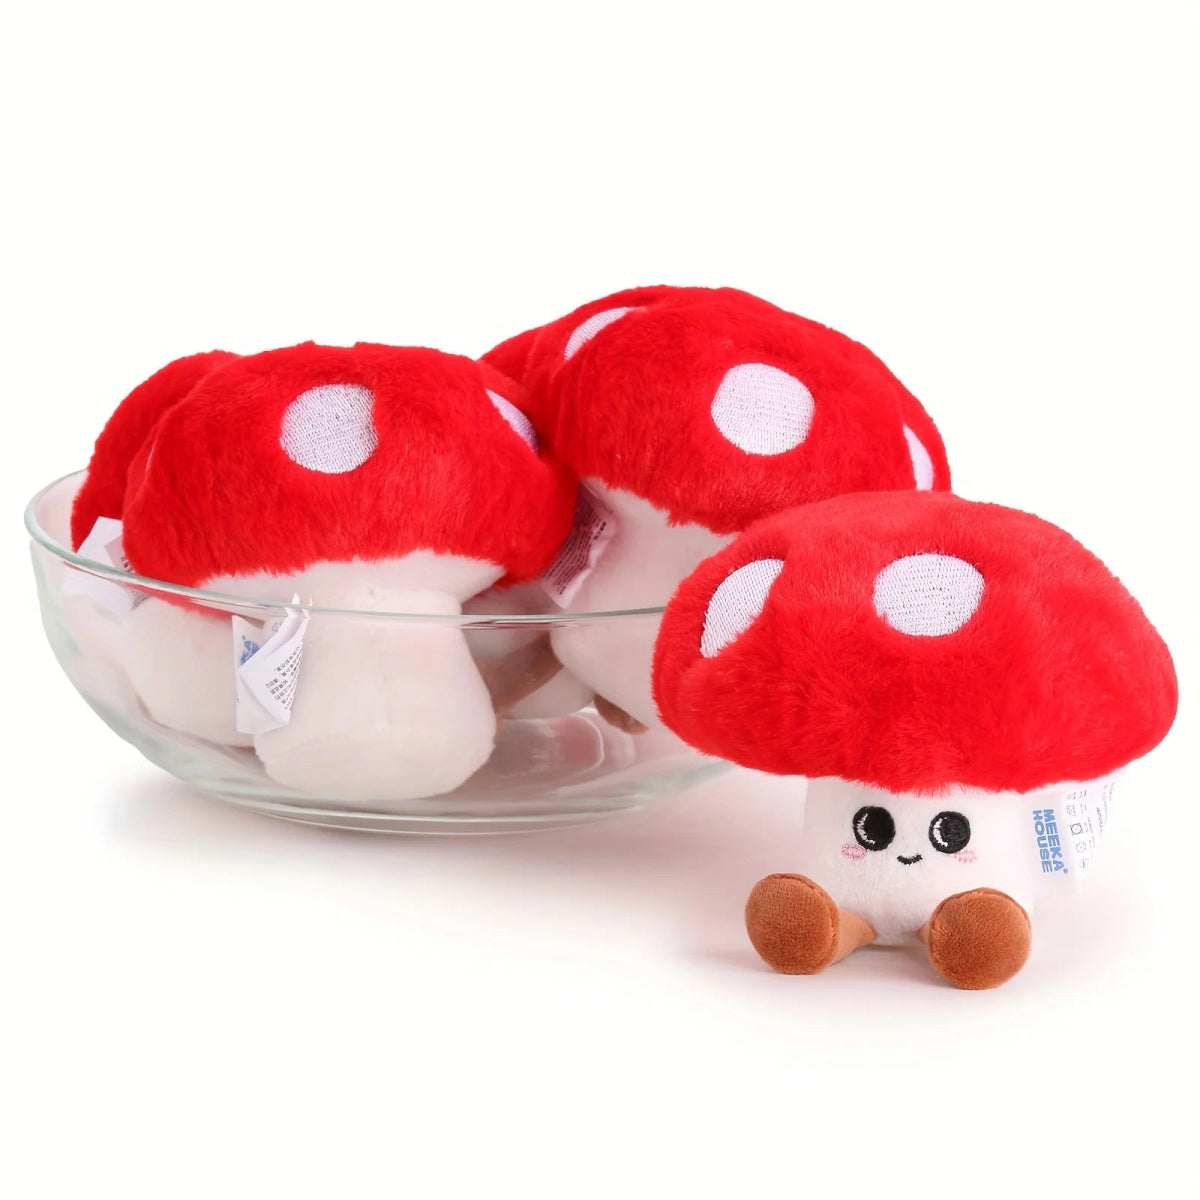 Red Mushroom Plush Educational Toy - Soft Plush Toys - Scribble Snacks